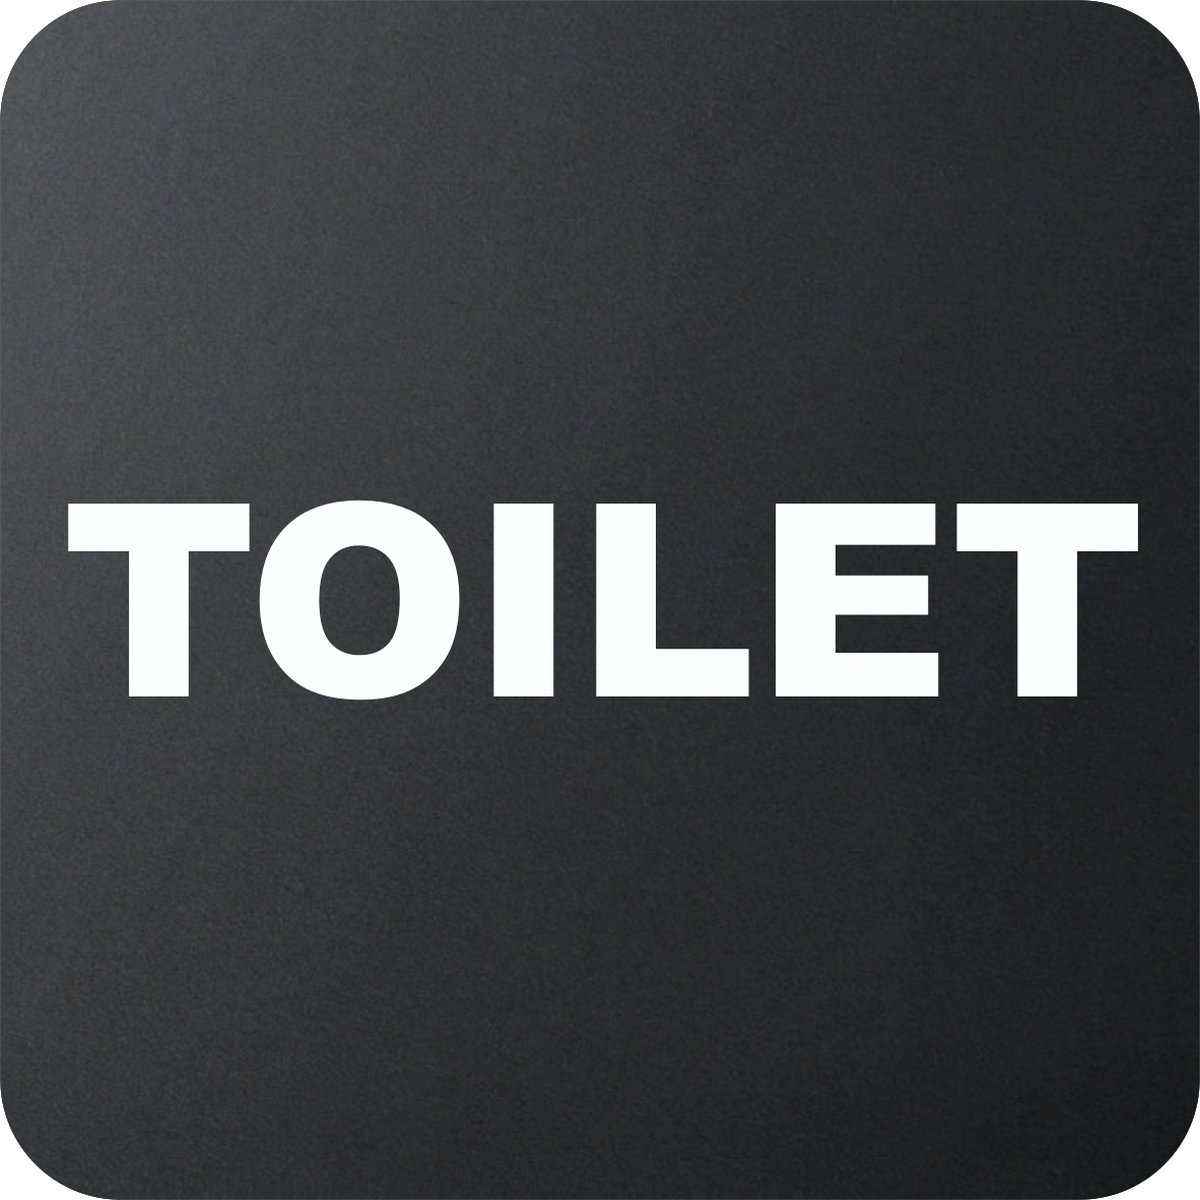 Zwart Pictogram infobord - 10cm x 10cm - Zelfklevend - type: Toilet